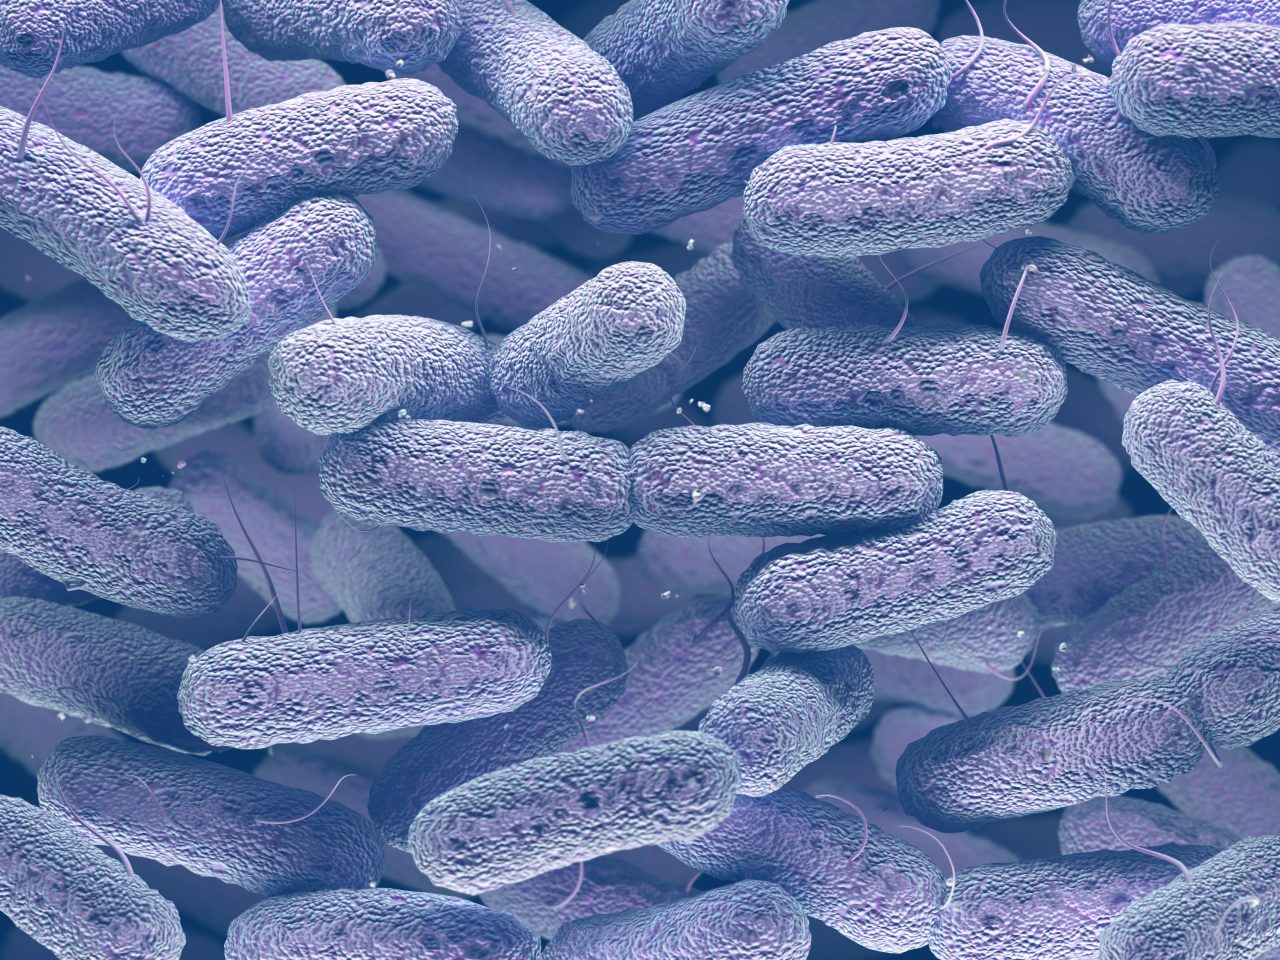 enterobacteriaceae-bacteria-family-2021-08-26-18-26-31-utc-1280x960.jpg